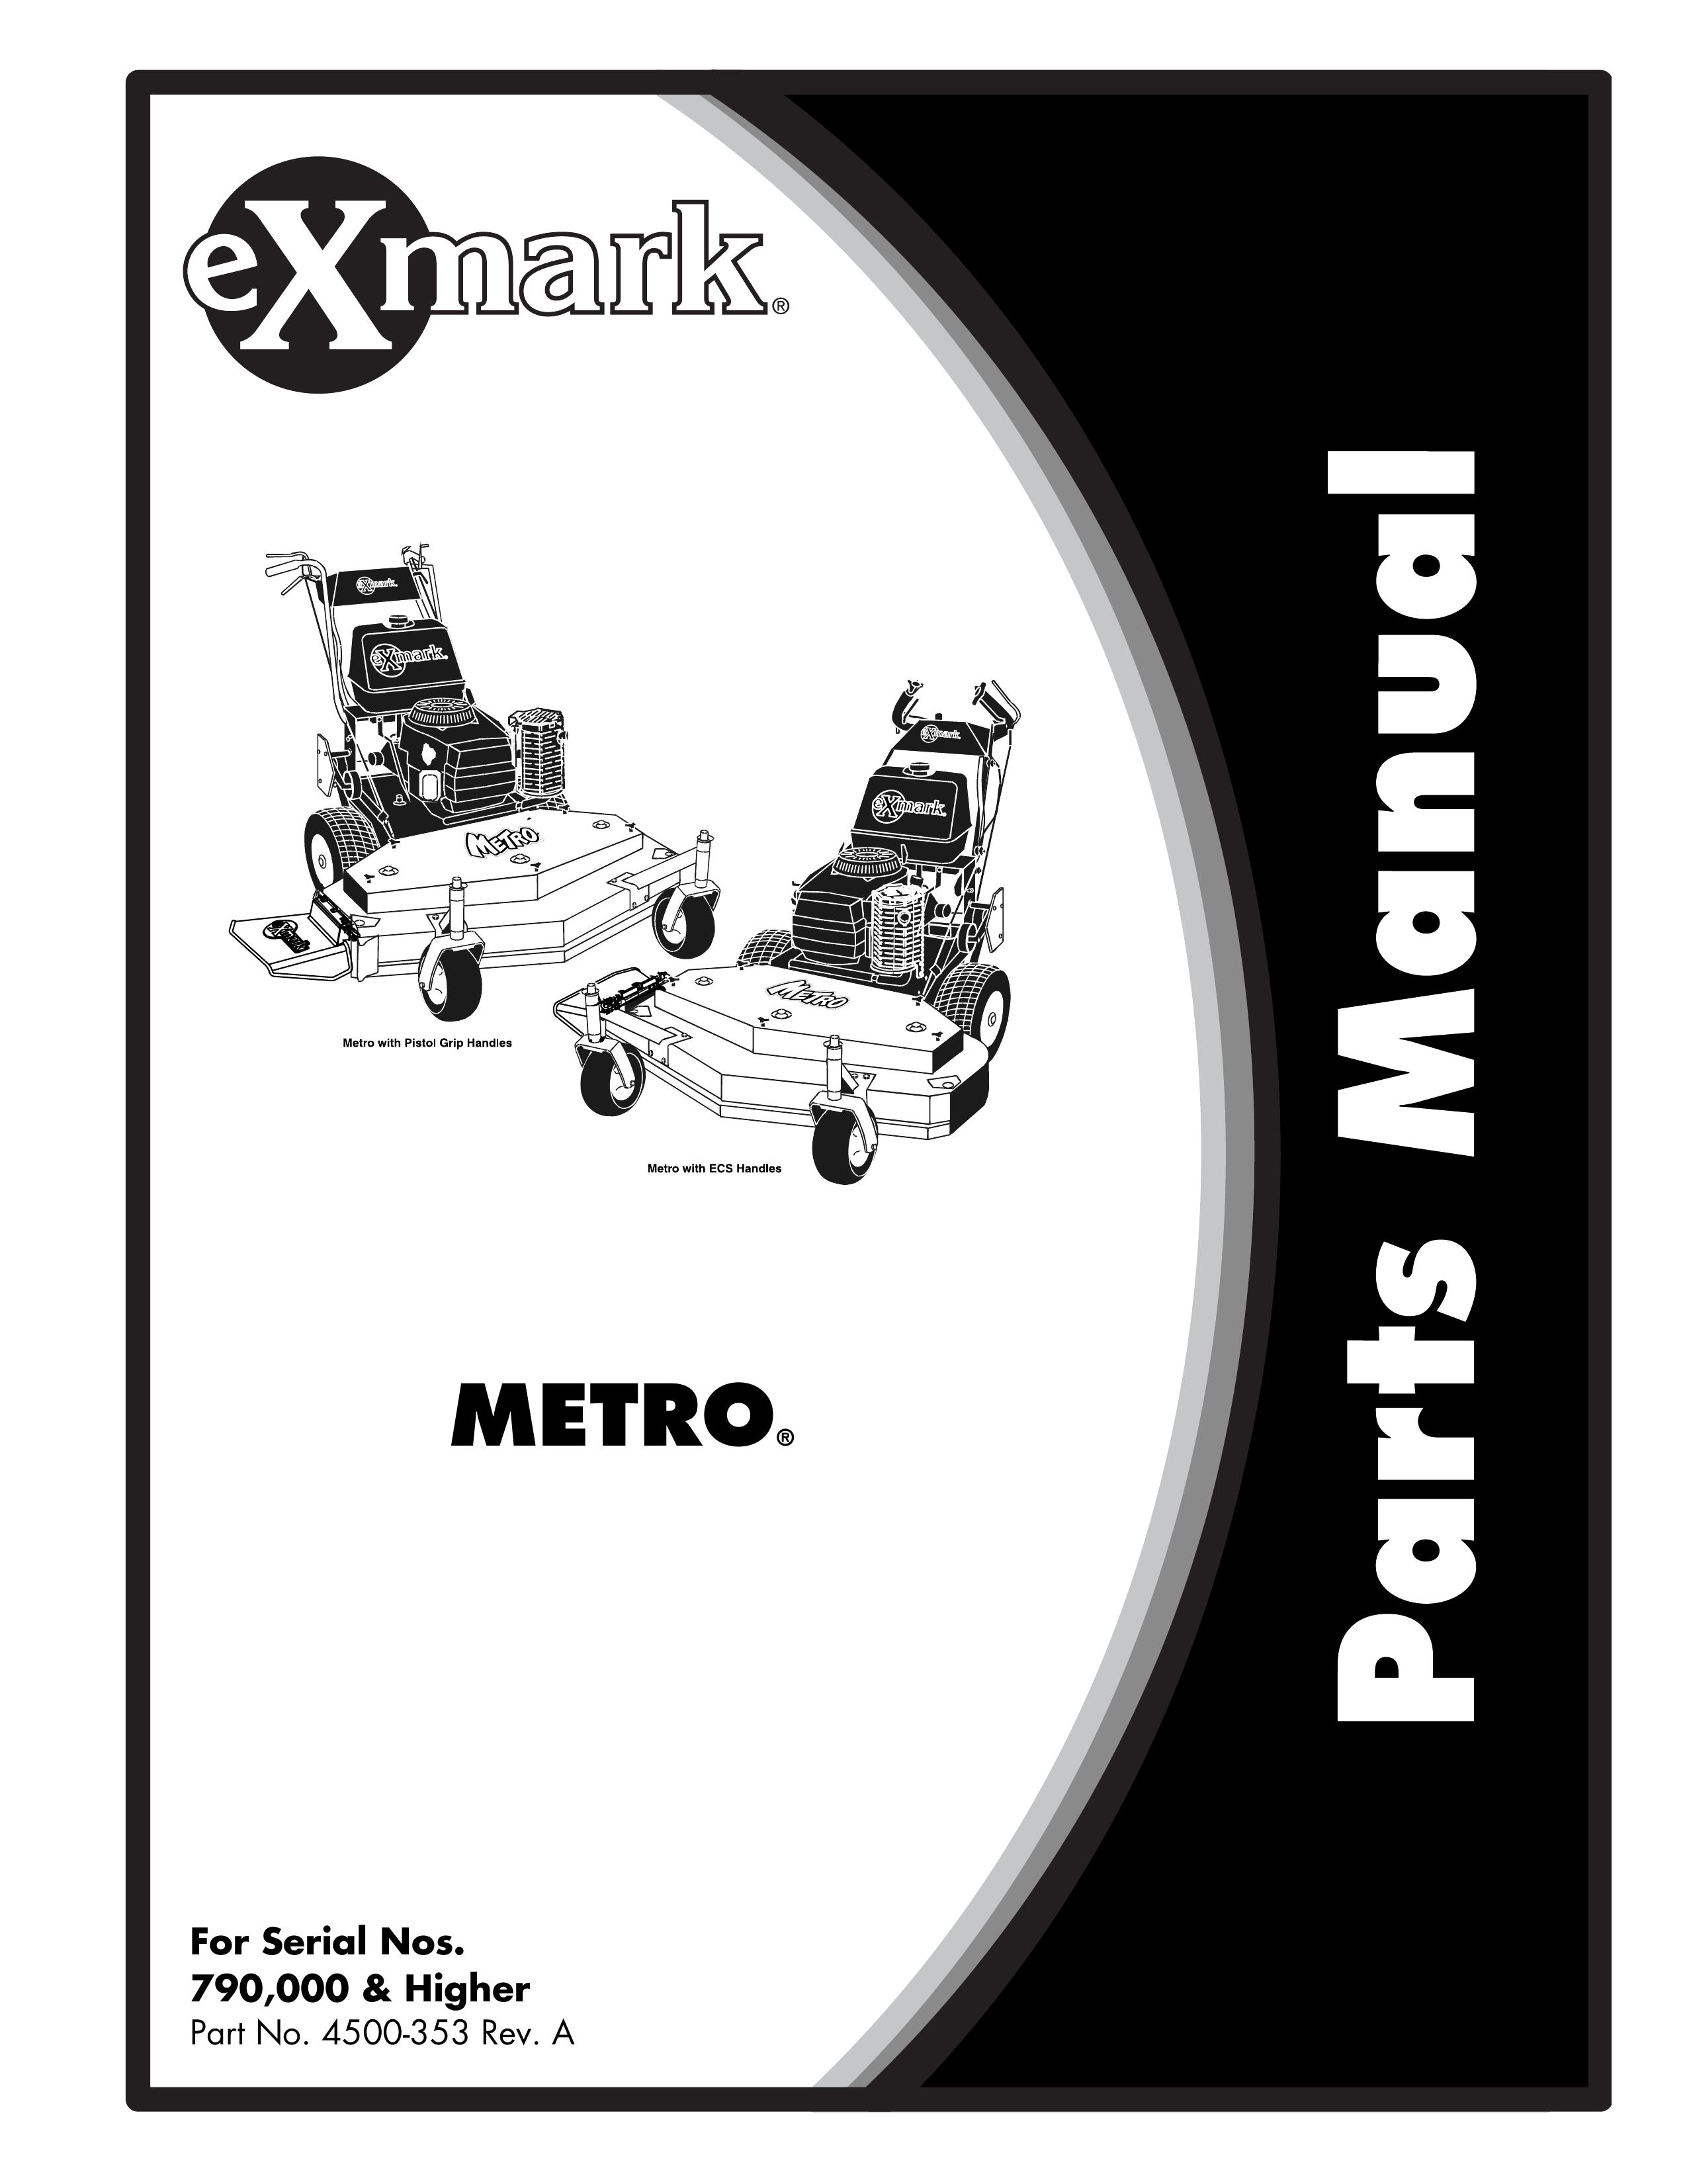 Exmark 4500-353 Lawn Mower User Manual